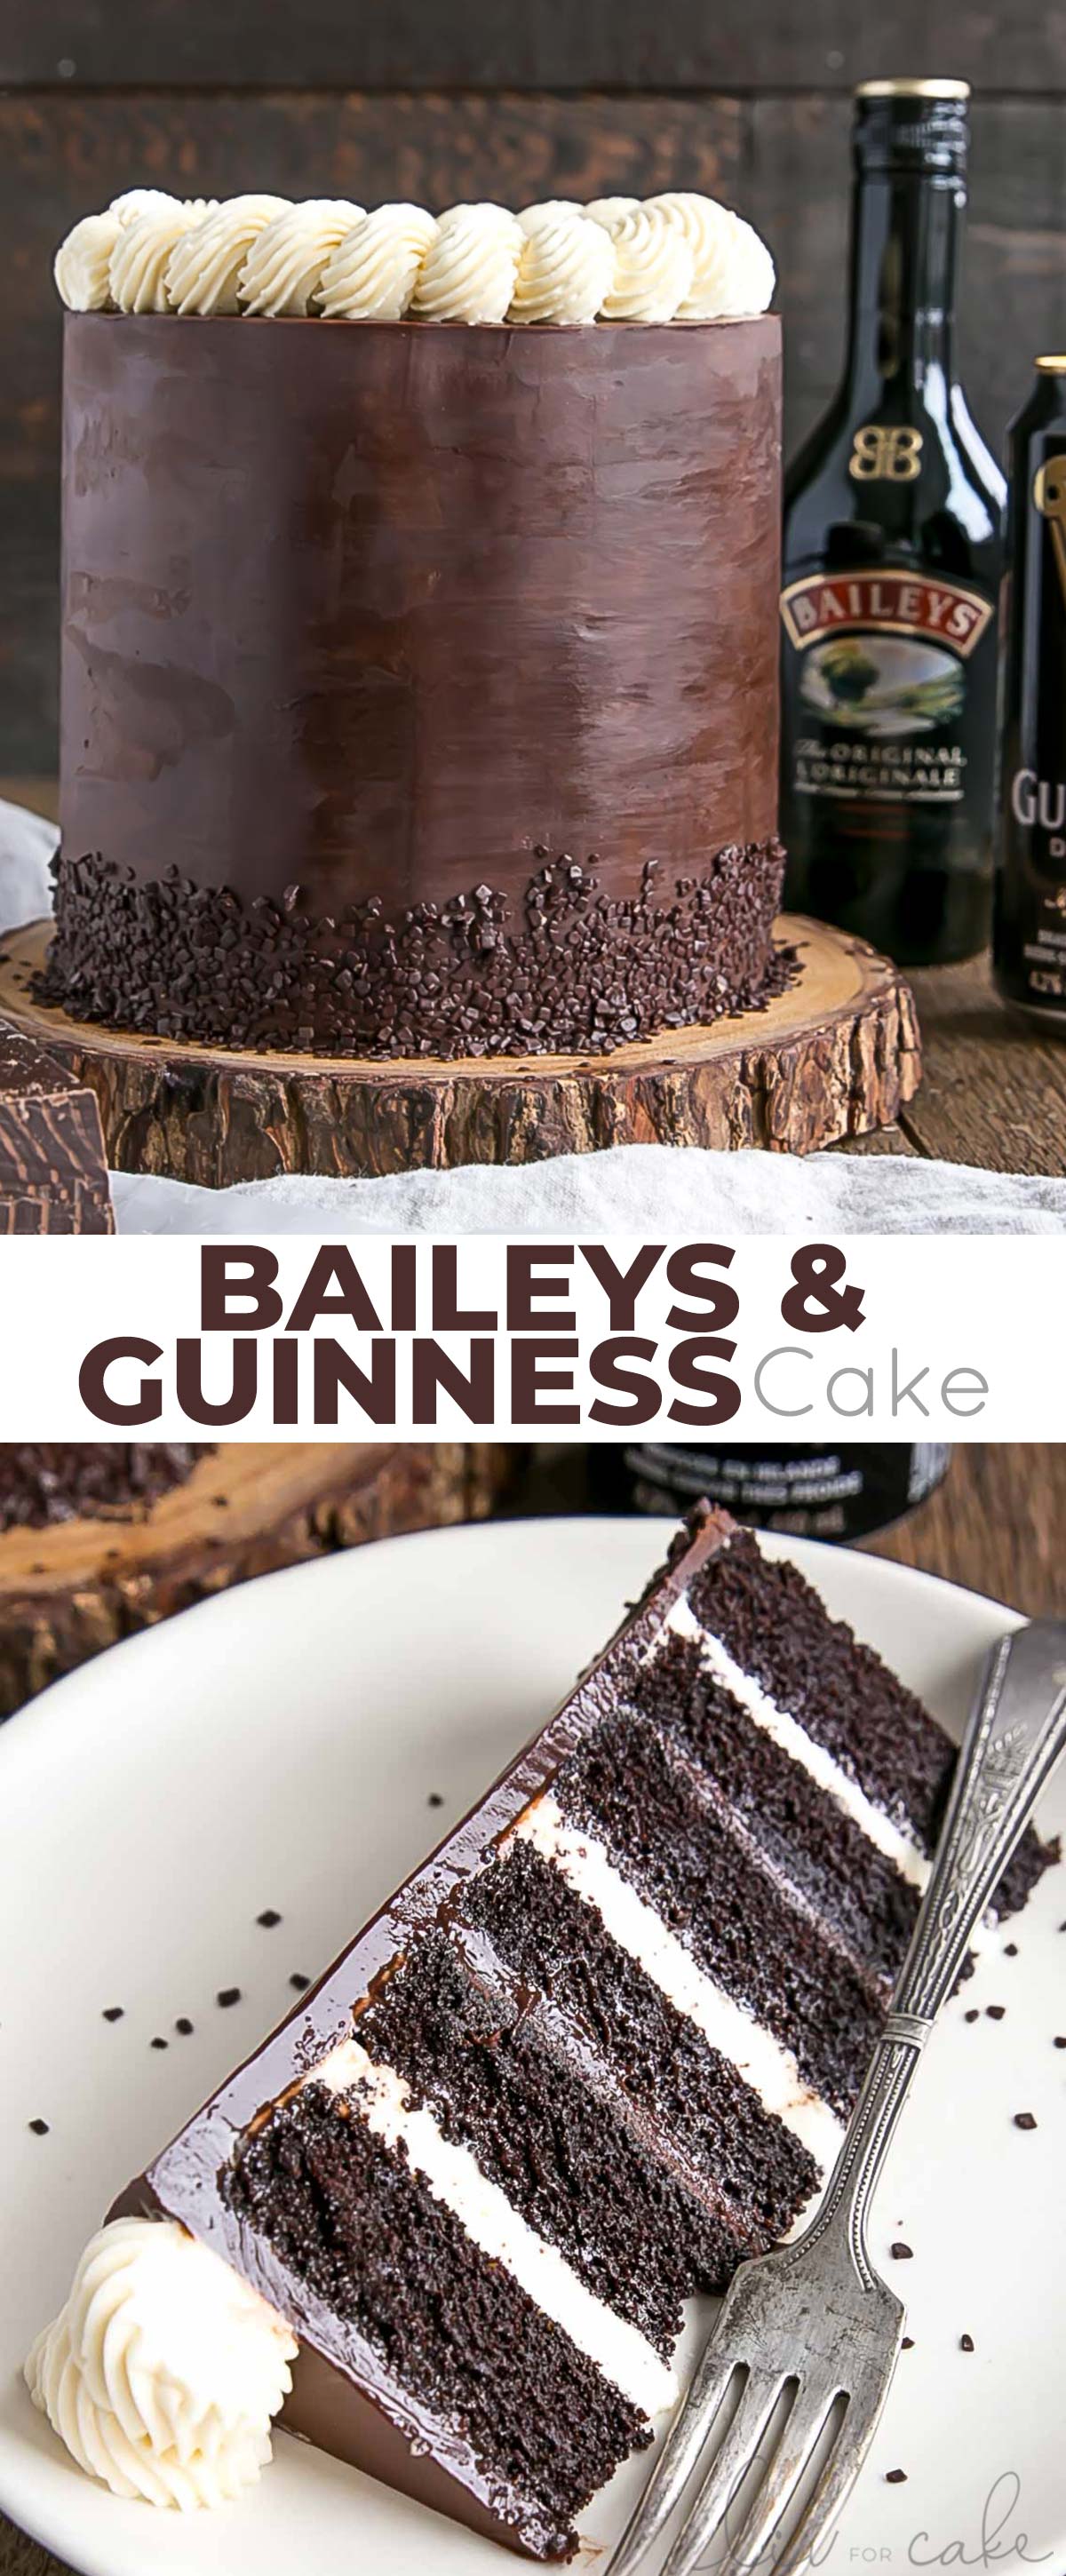 Baileys & Guinness Cake Collage